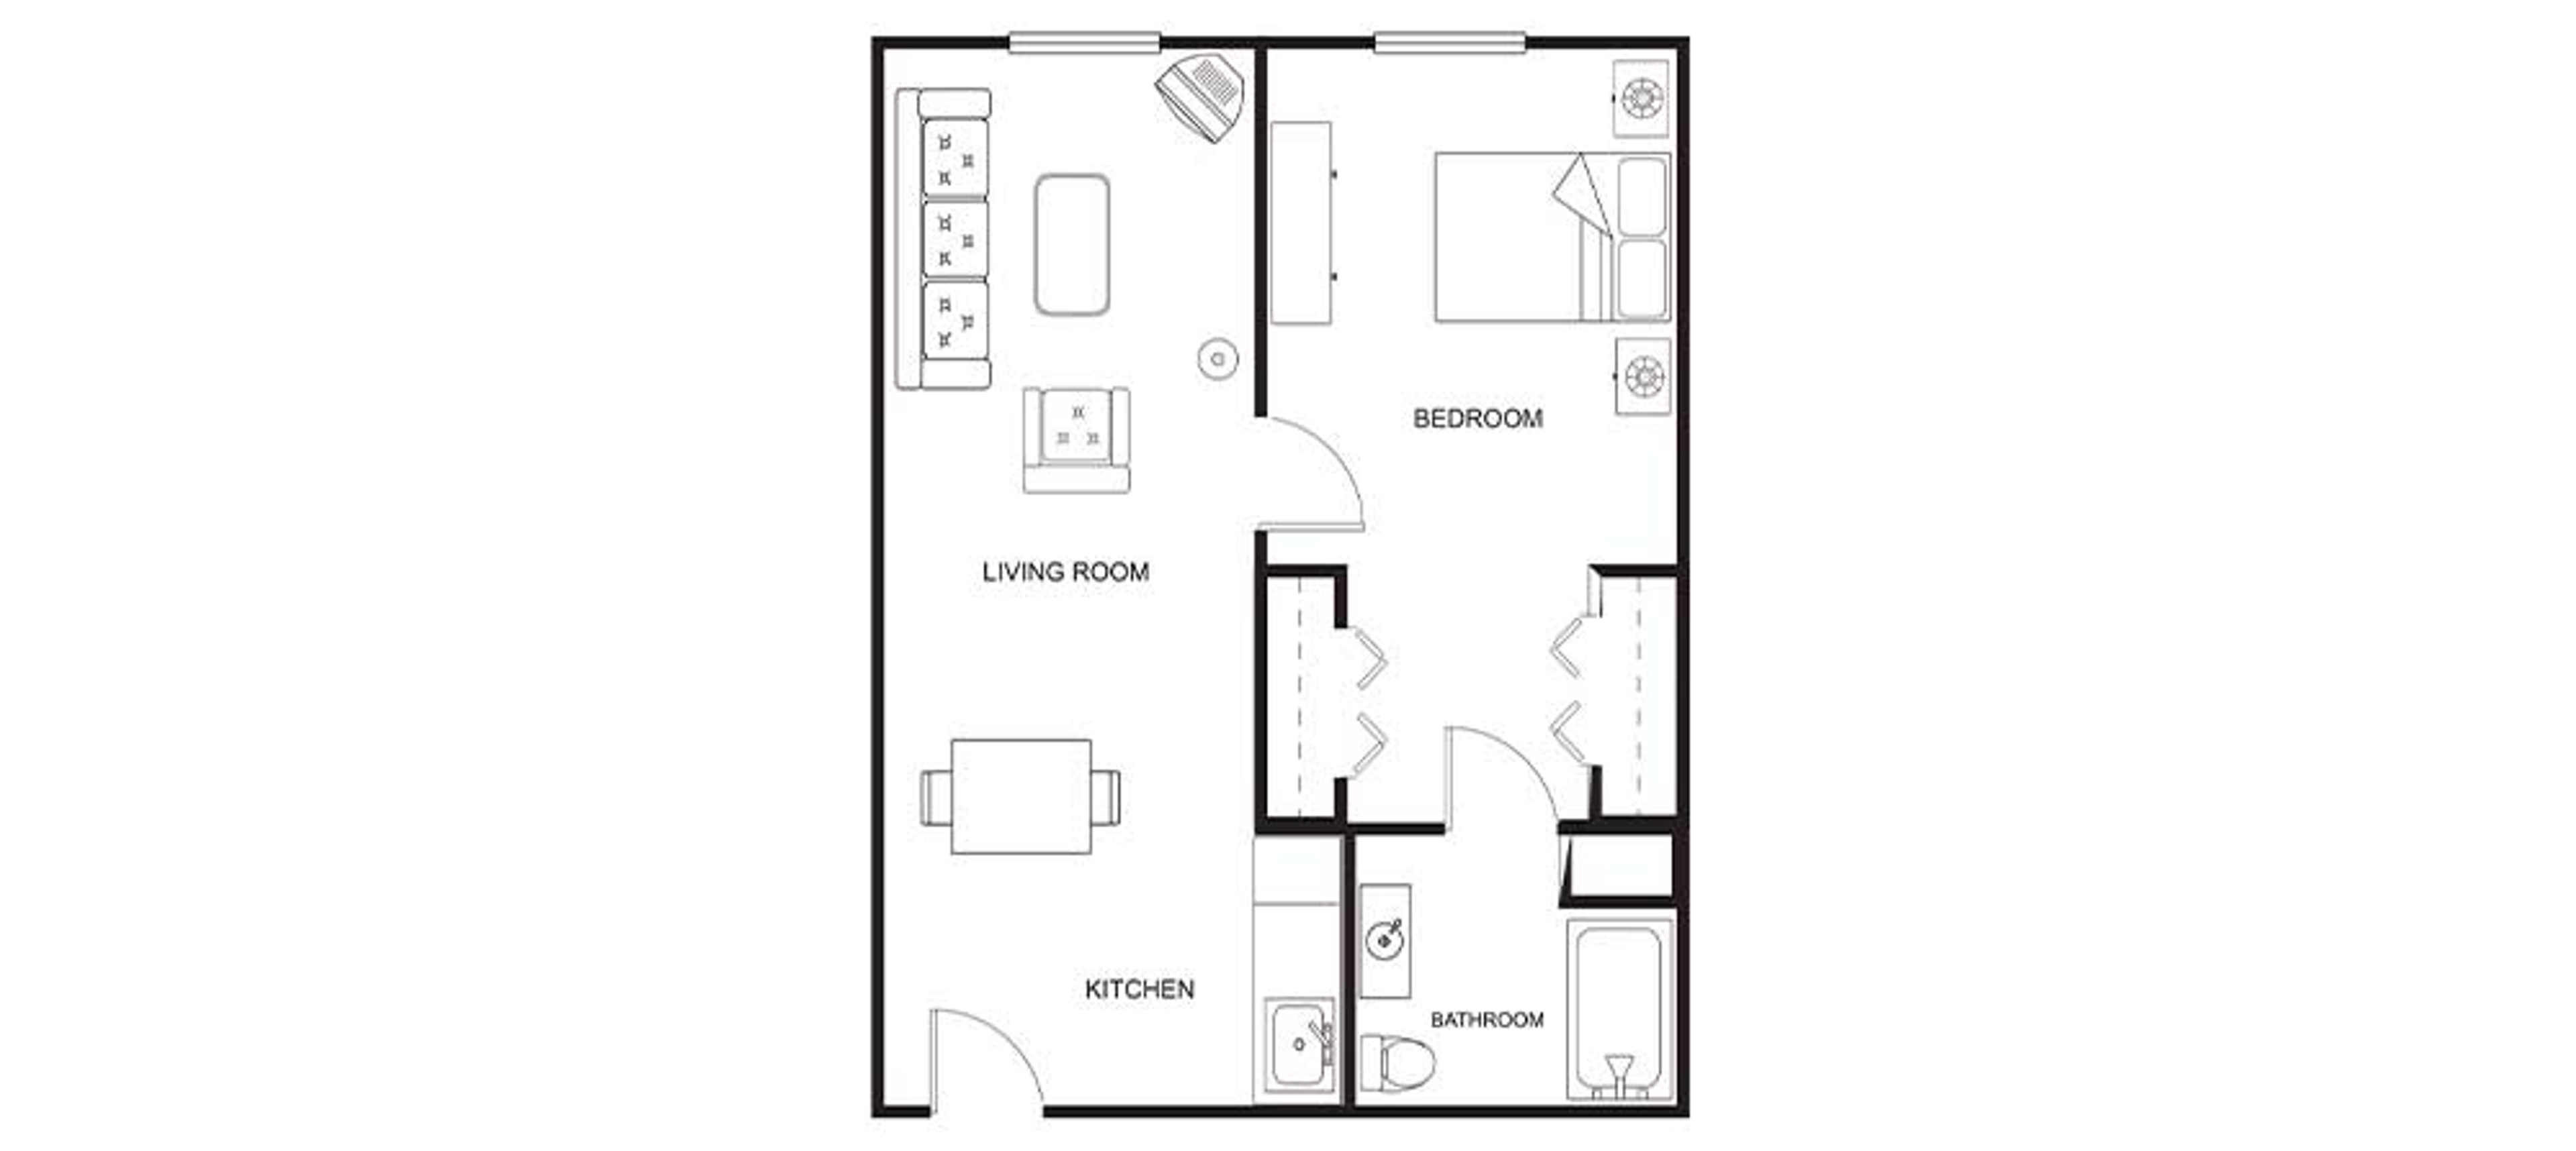 Floorplan - Bay Side Terrace - 1B 1B B3